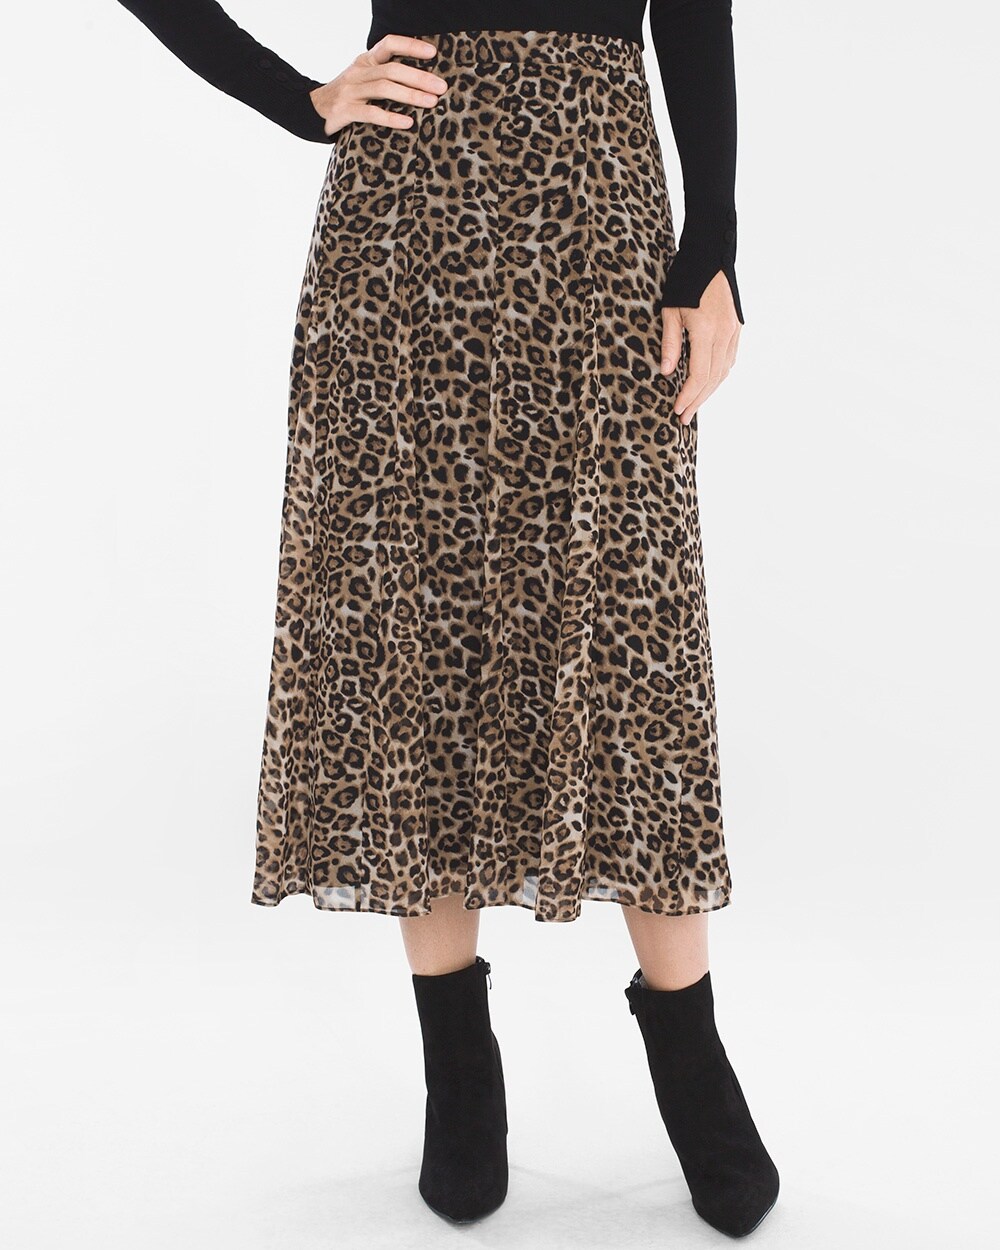 long leopard print skirt